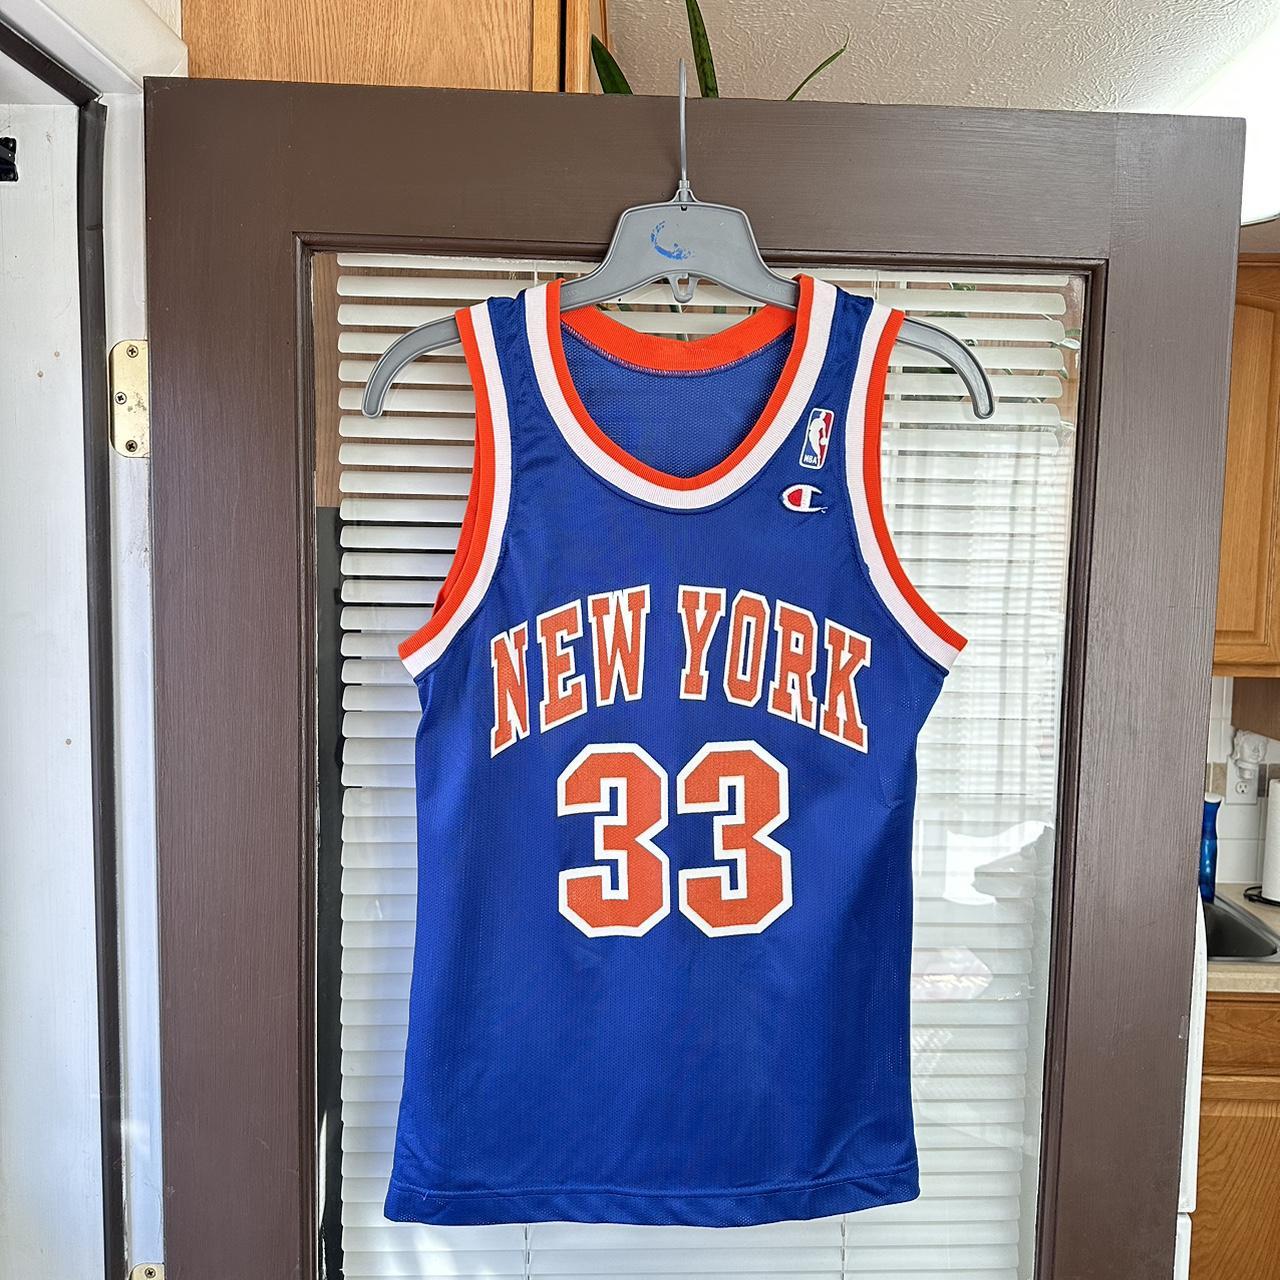 Vintage Patrick Ewing New York Knicks Number 33 NBA Basketball 